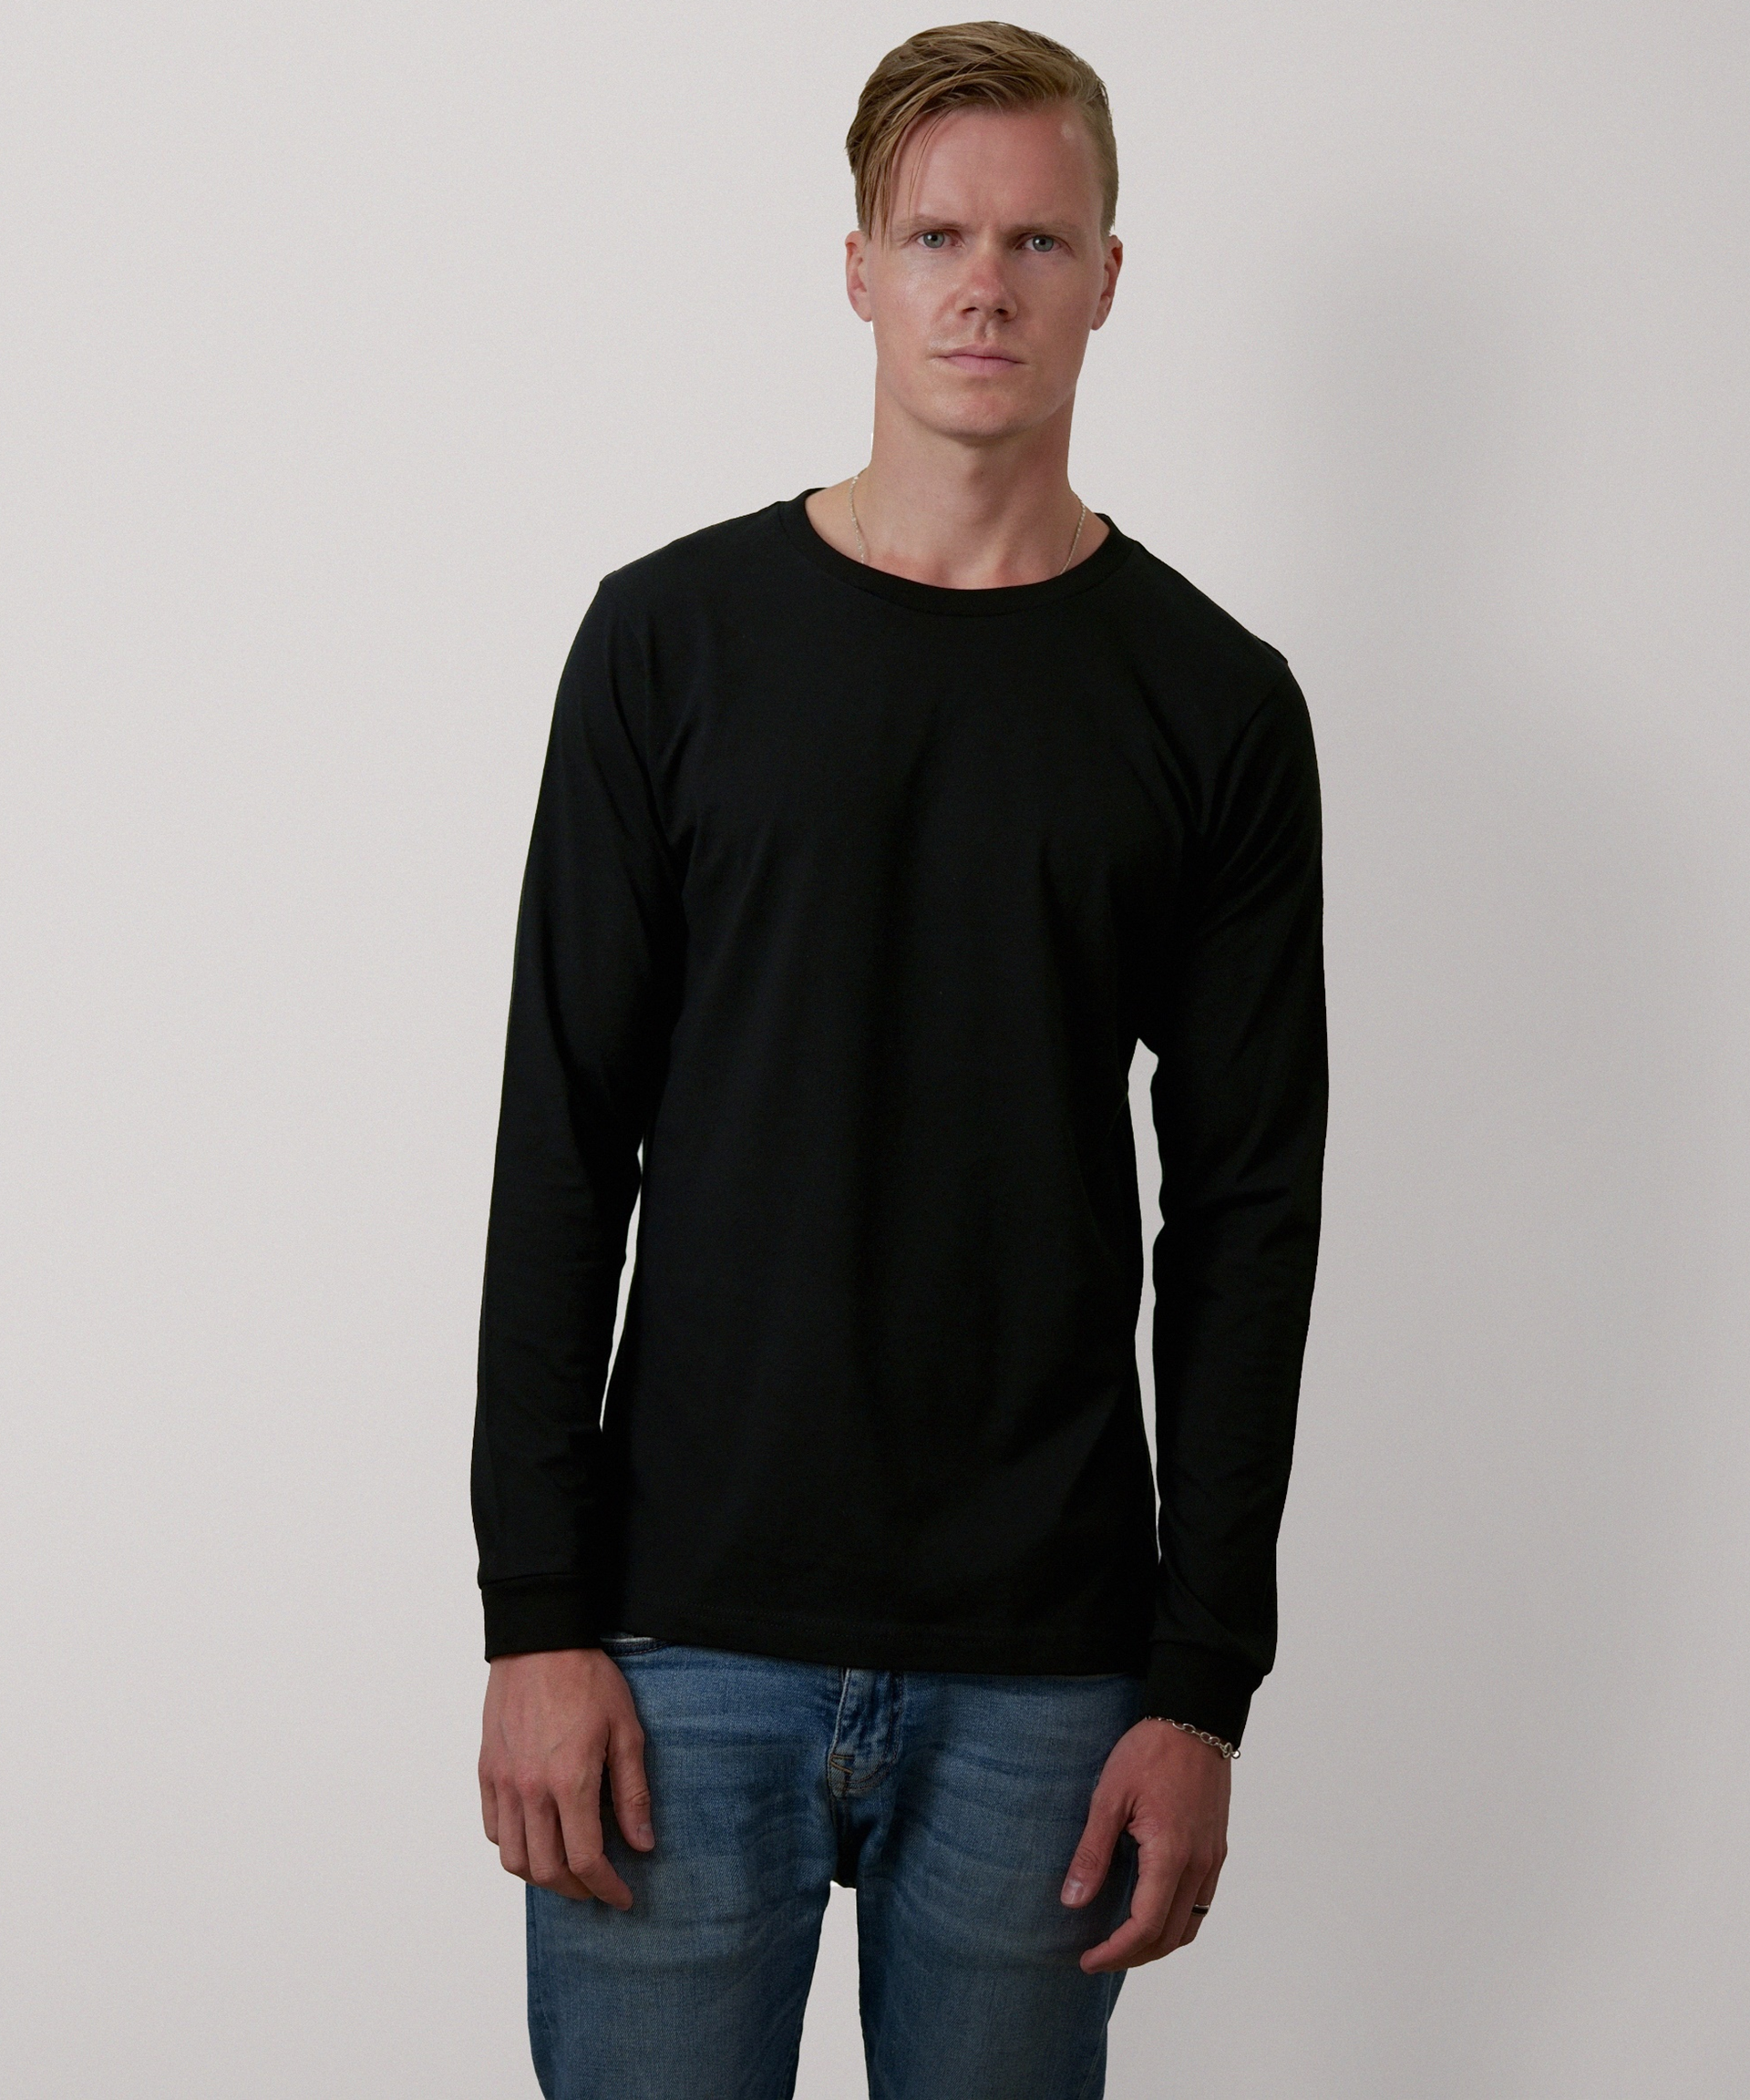 Essential Long Sleeve T-Shirt for Men (Black)